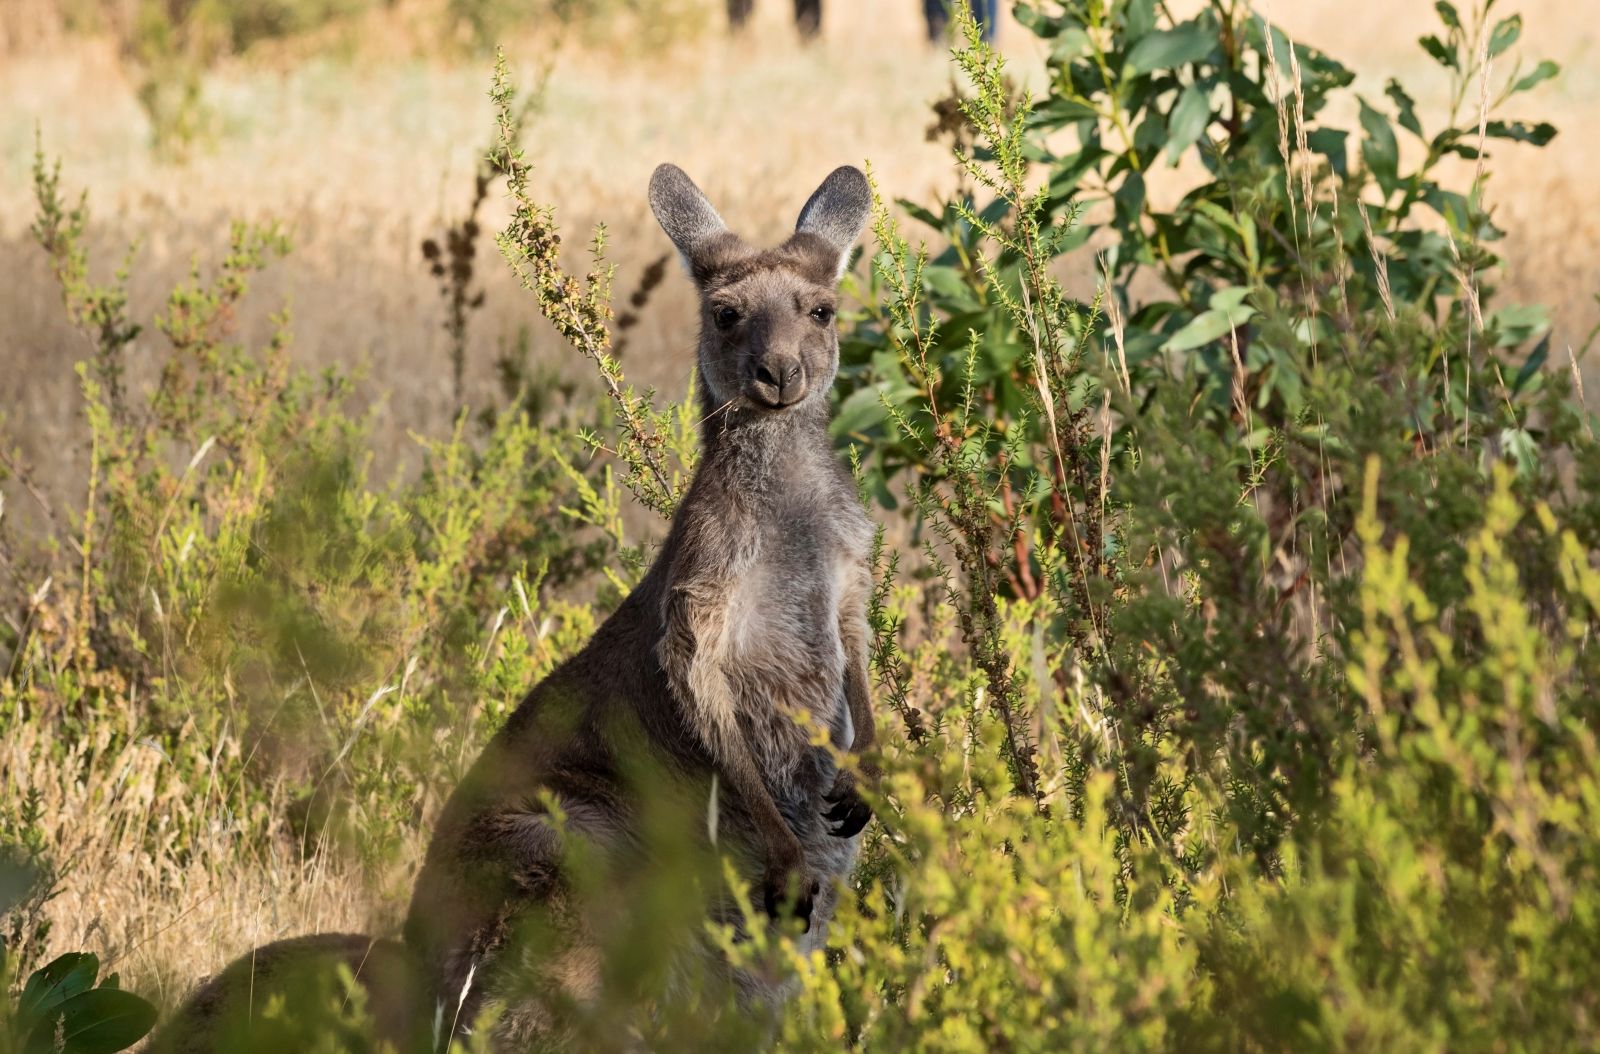 A kangaroo peeking out from amongst the outback bush